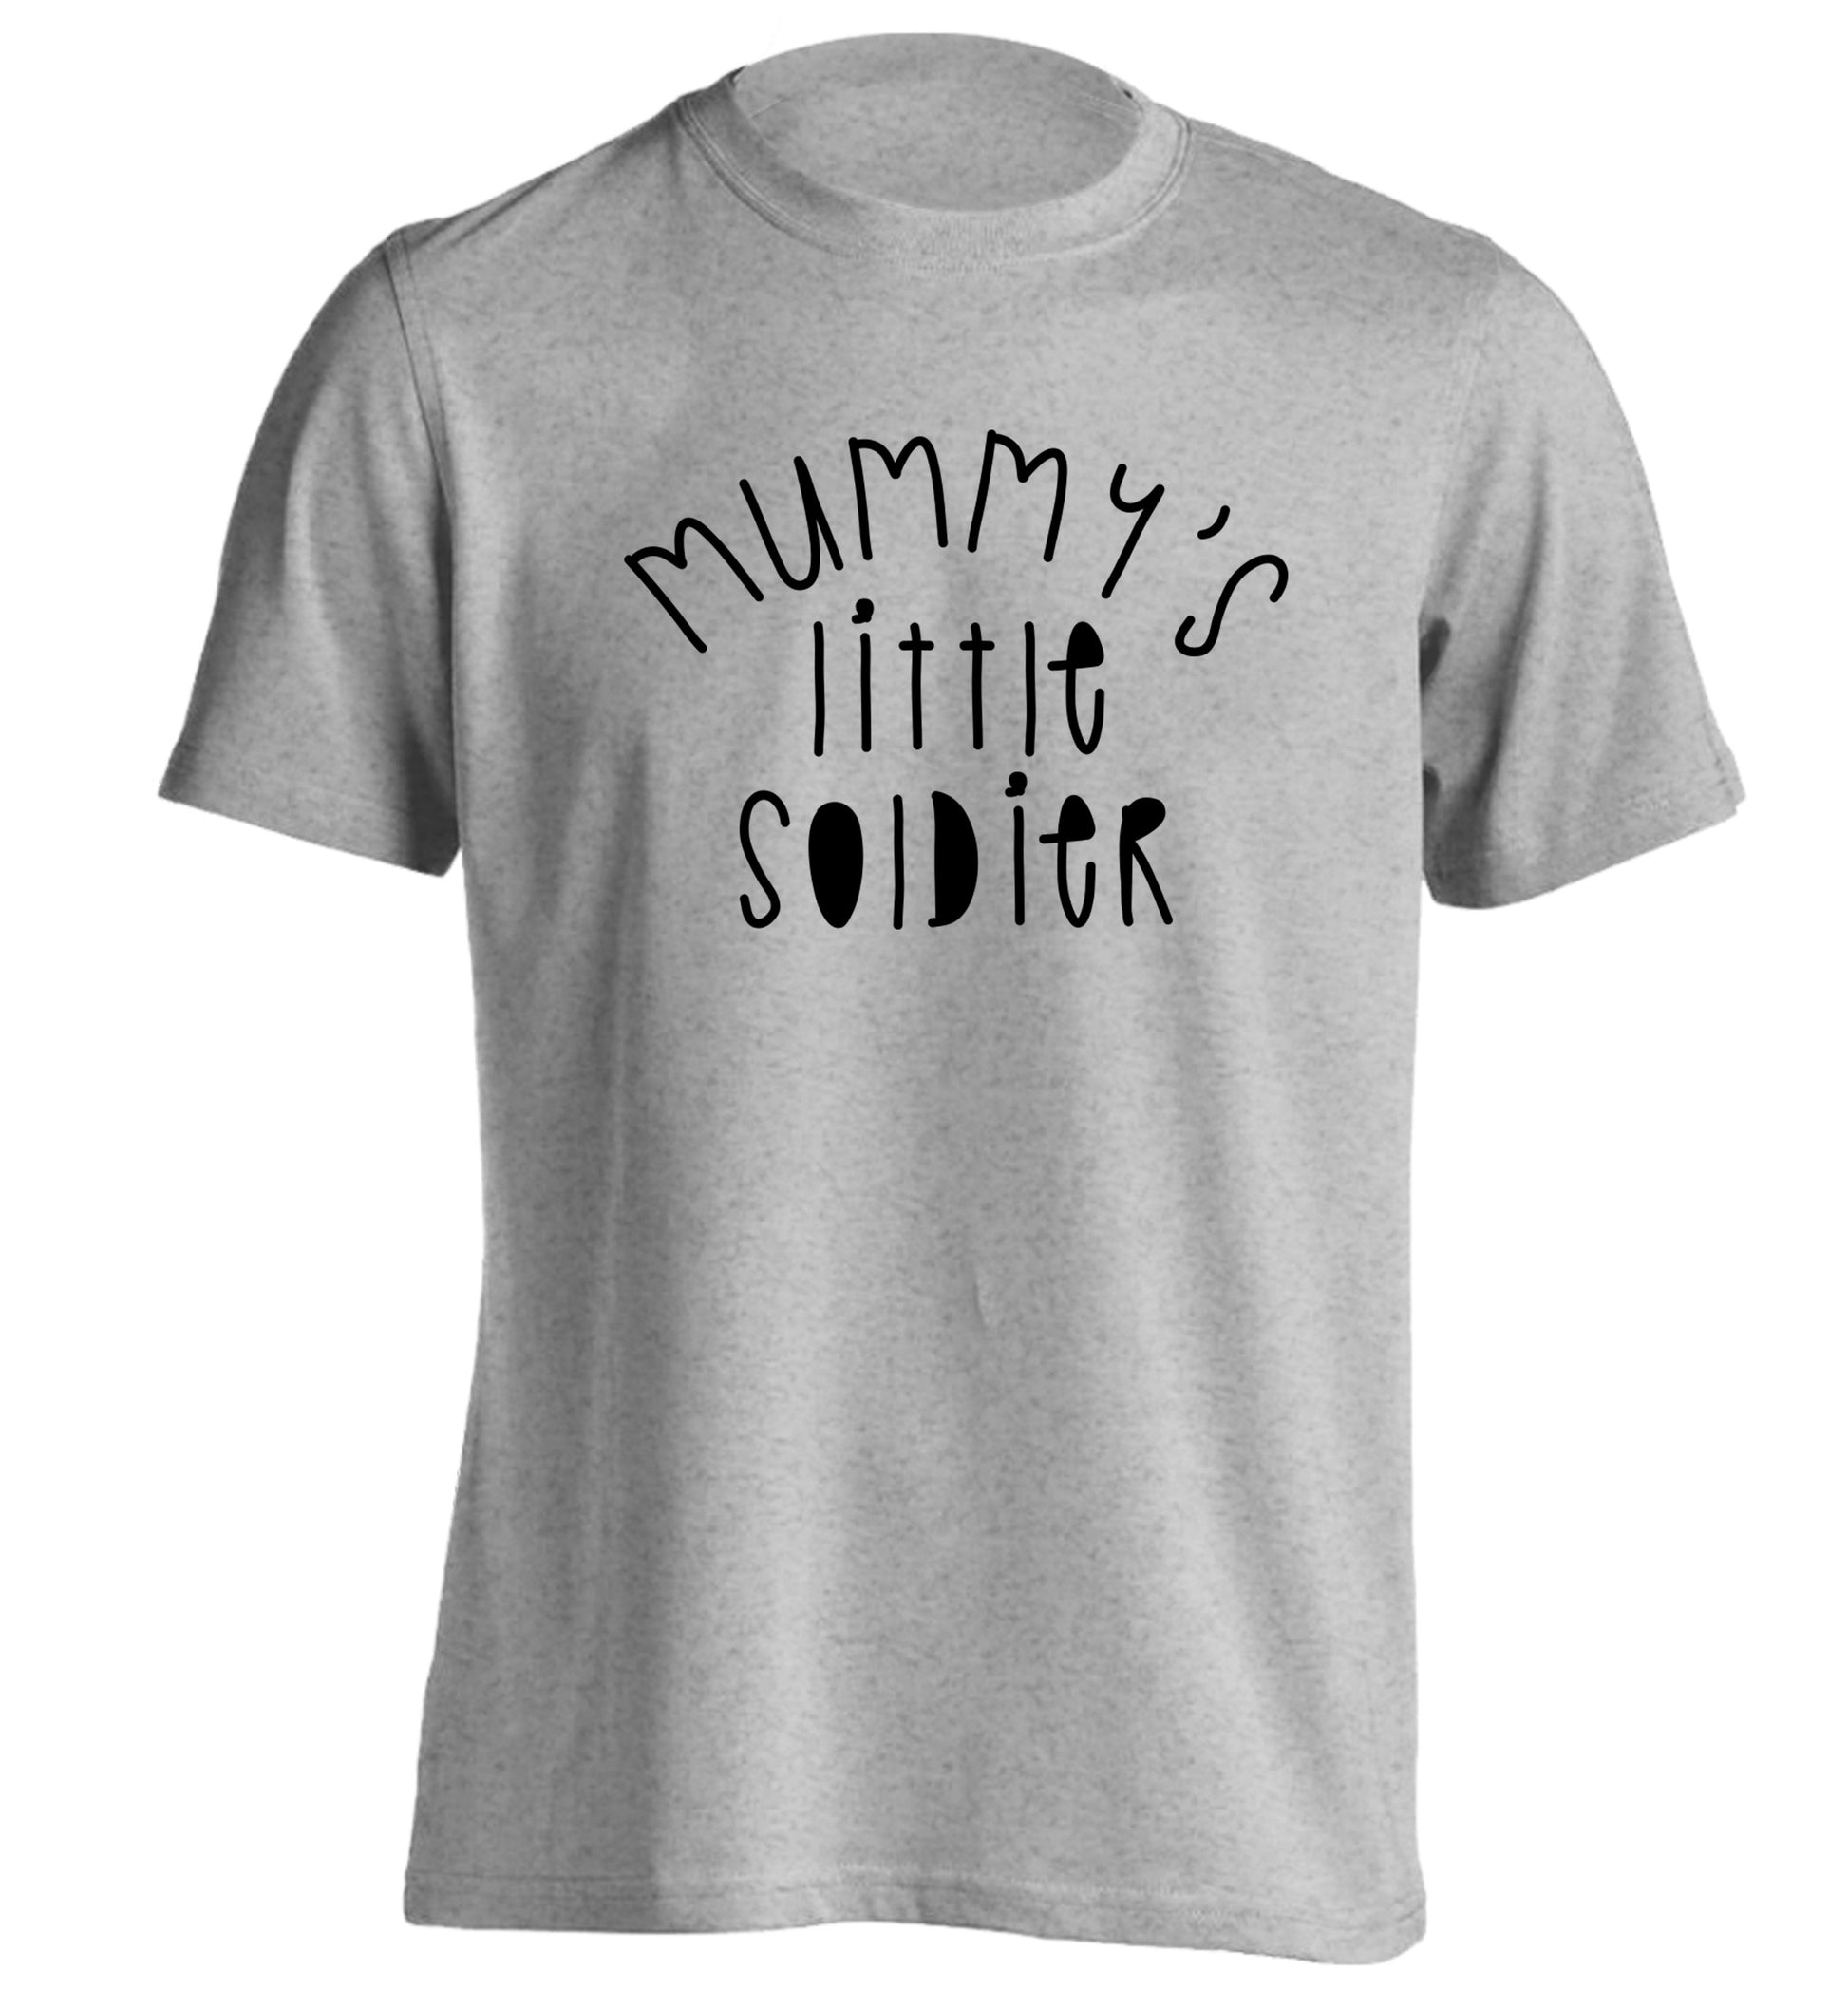 Mummy's little soldier adults unisex grey Tshirt 2XL